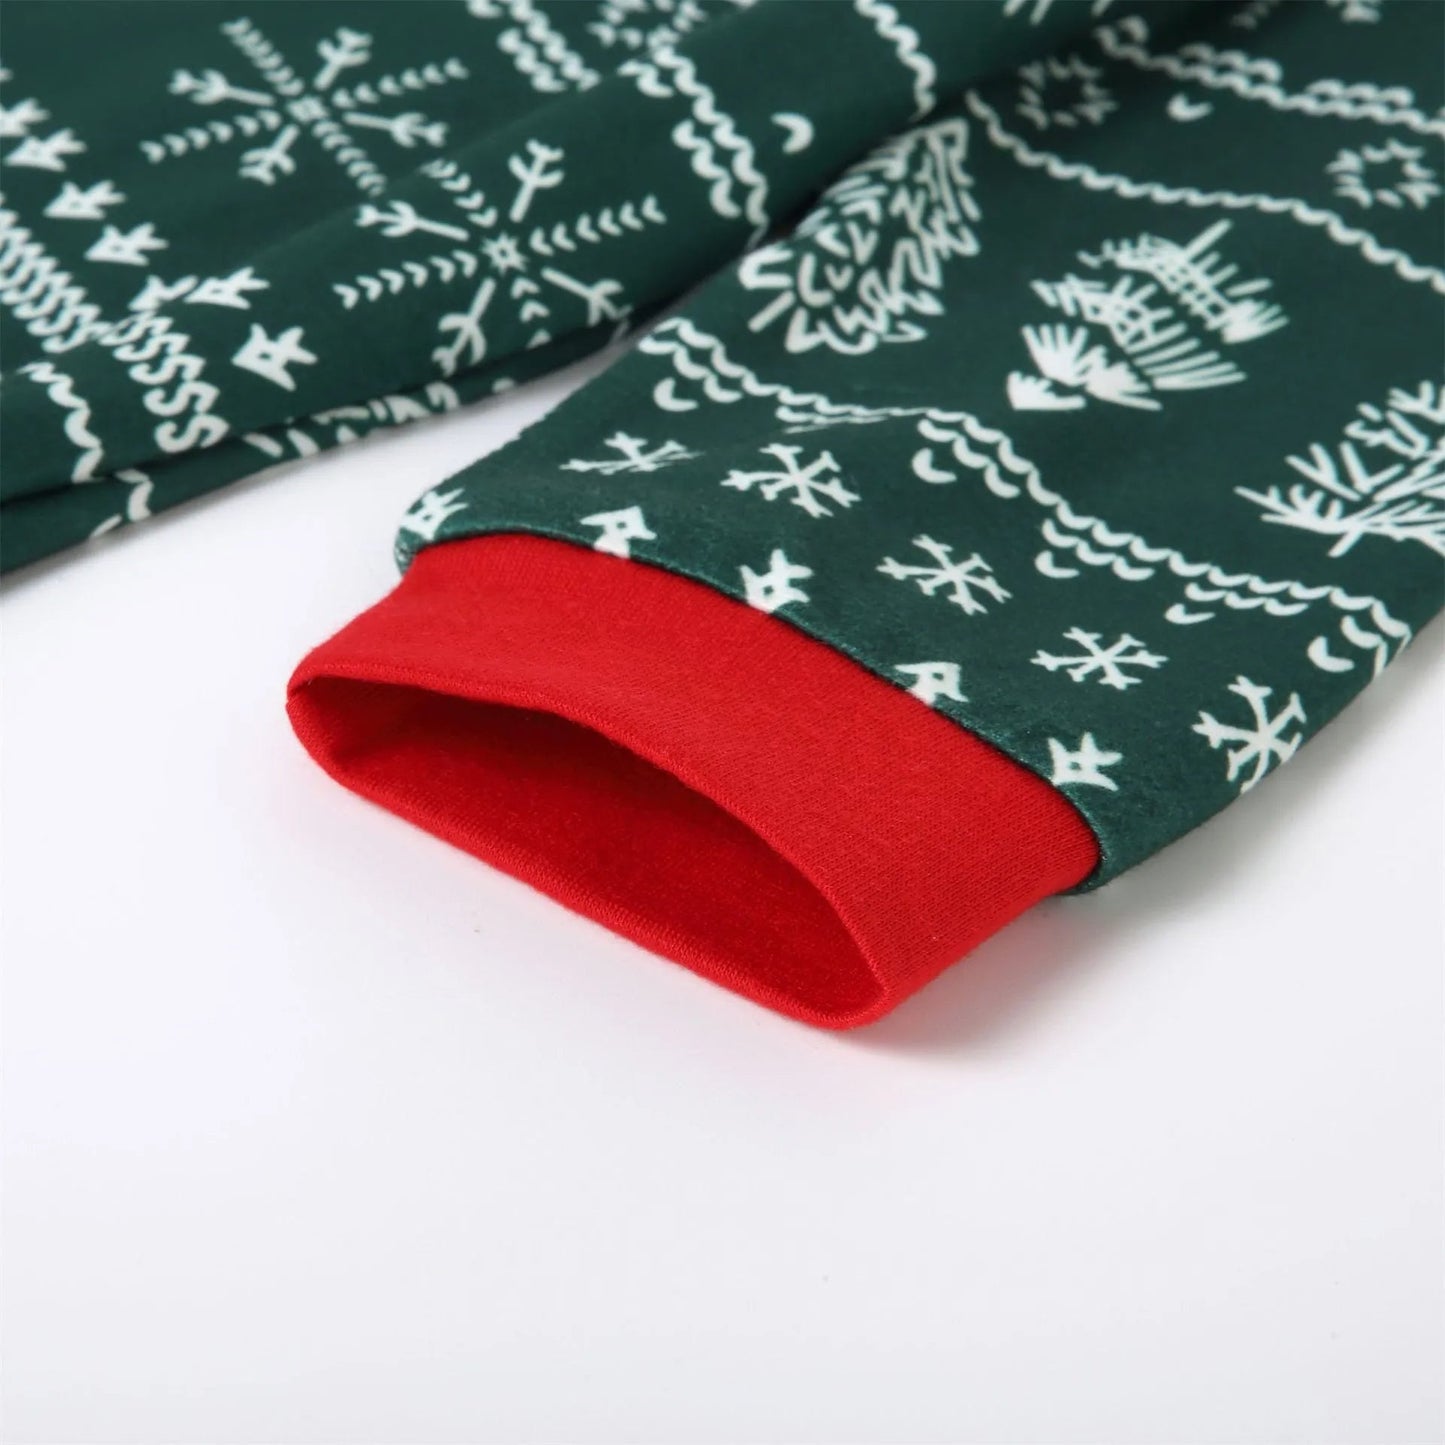 Fashionsarah.com Christmas Family Matching Pajamas